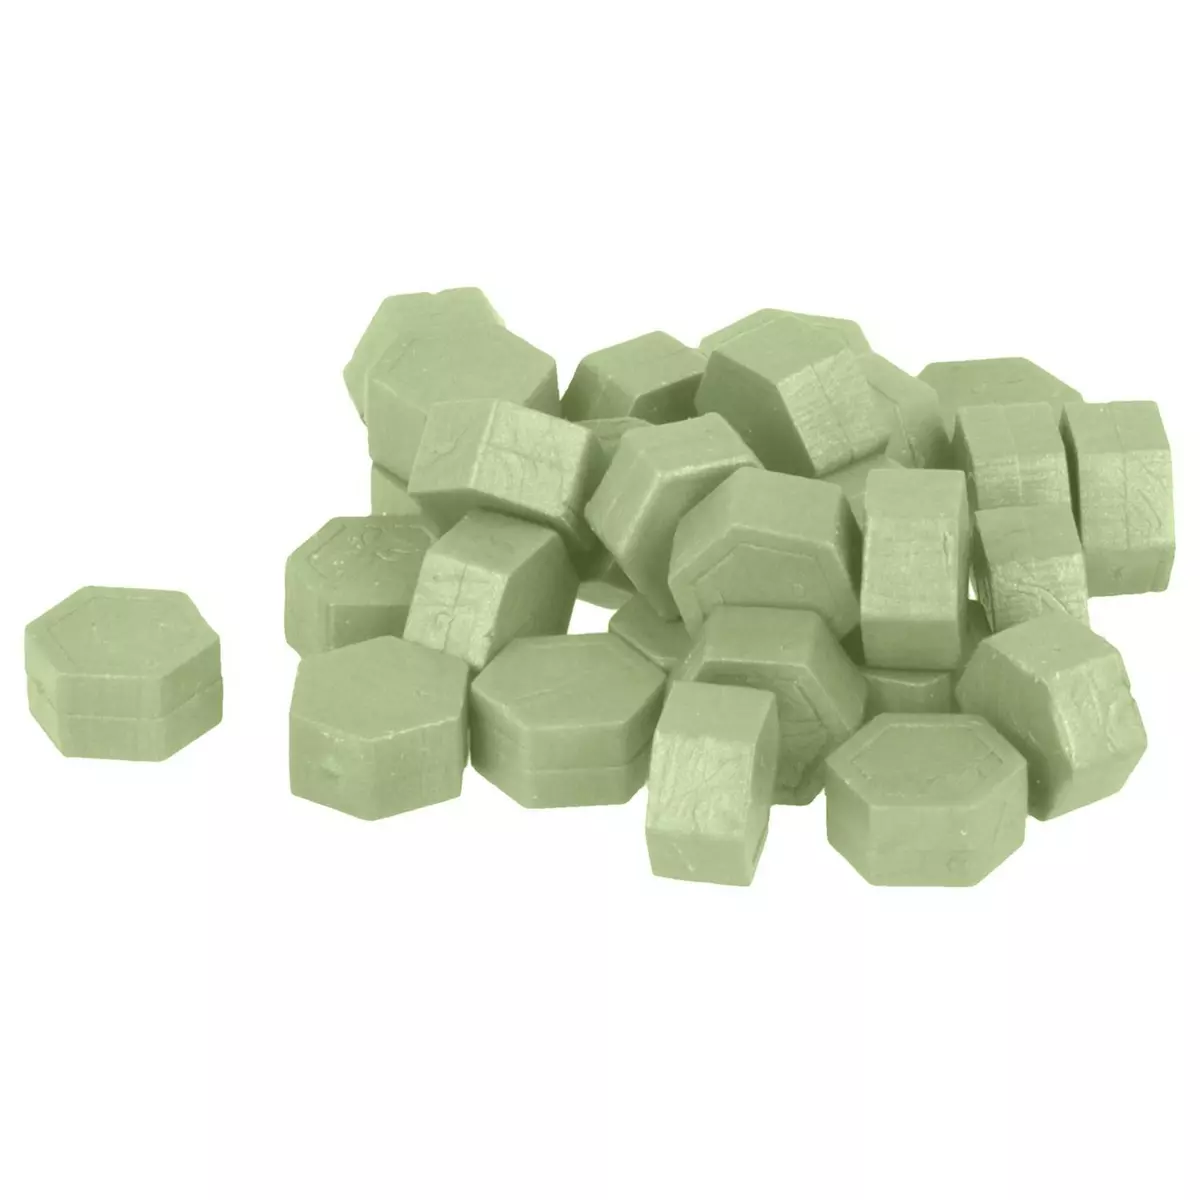 Artemio Perles de cire hexagonales 30 g - Vert clair